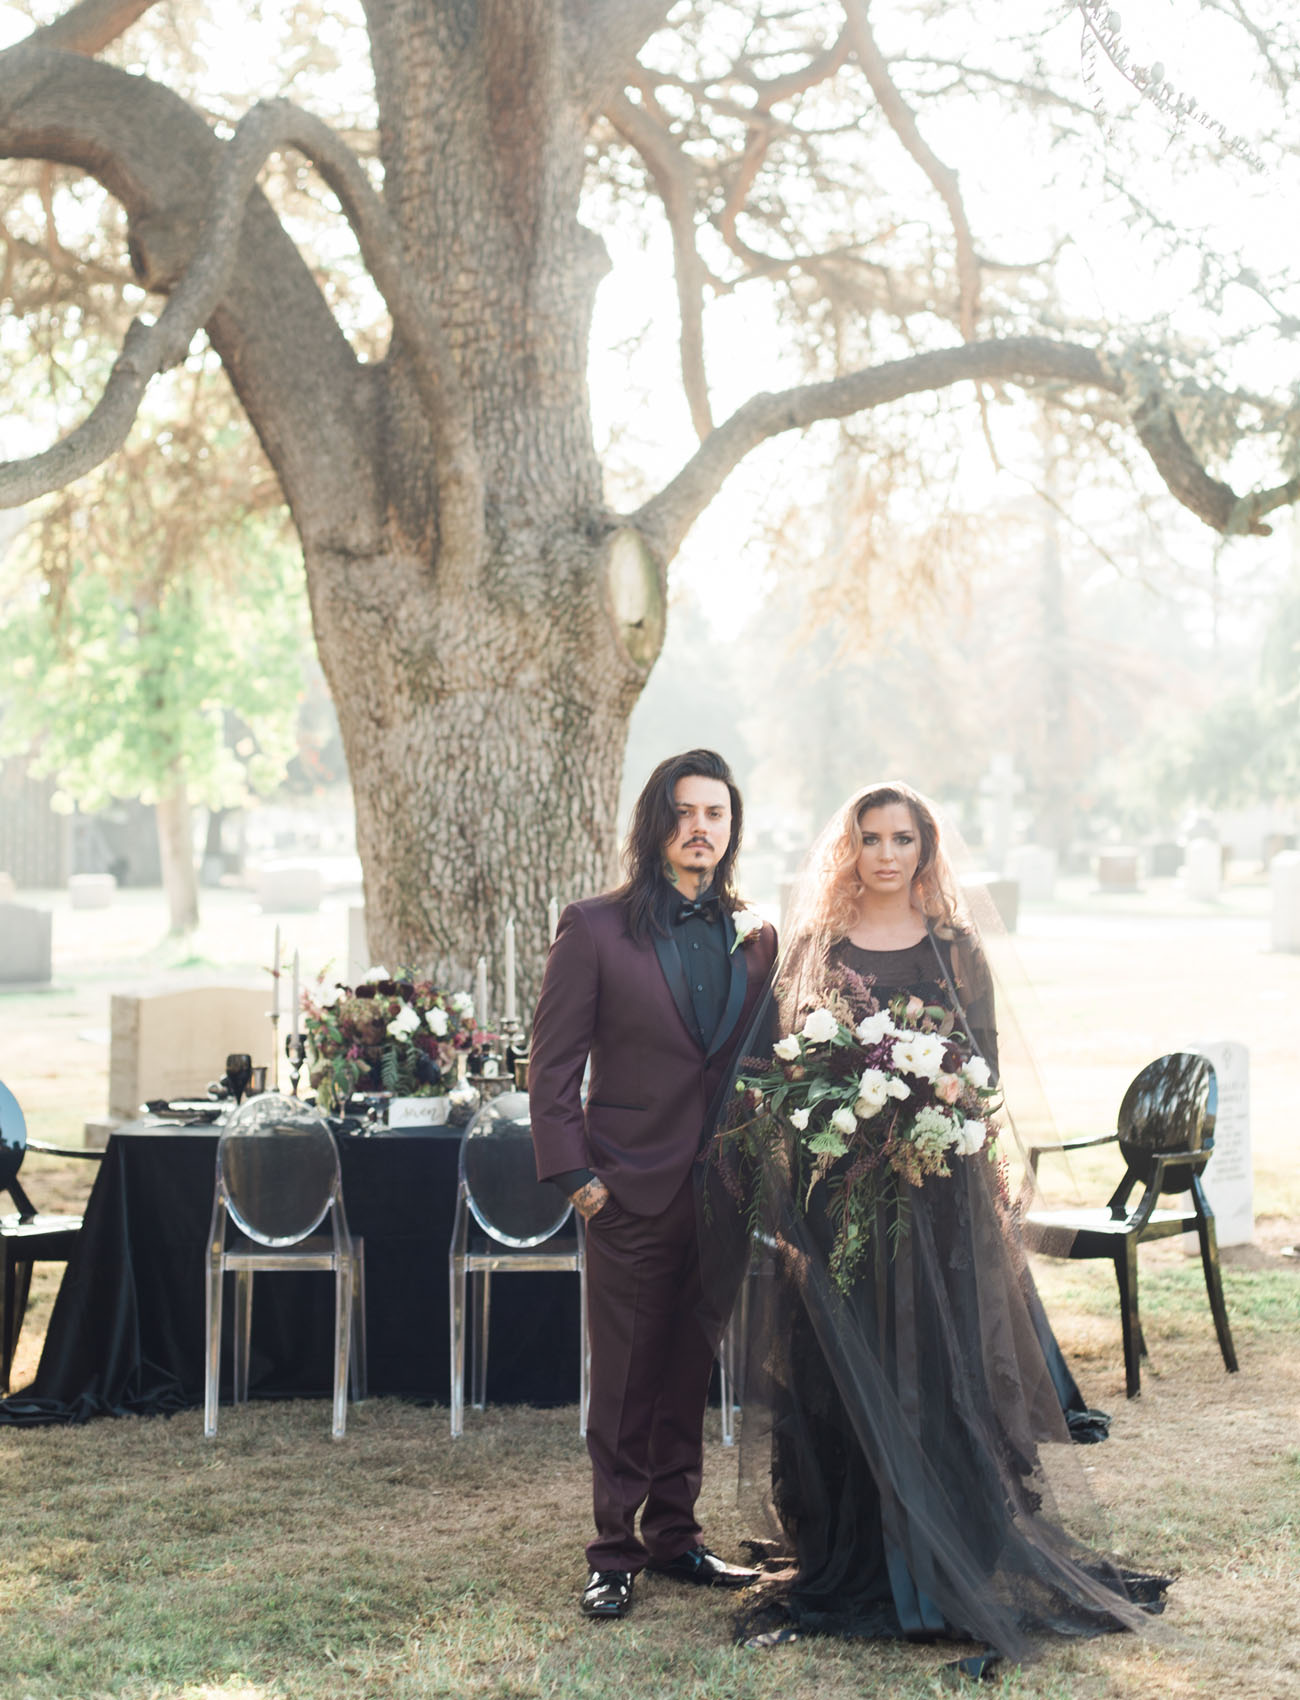 ?Til Death Do Us Part: a Wedding in a Cemetery